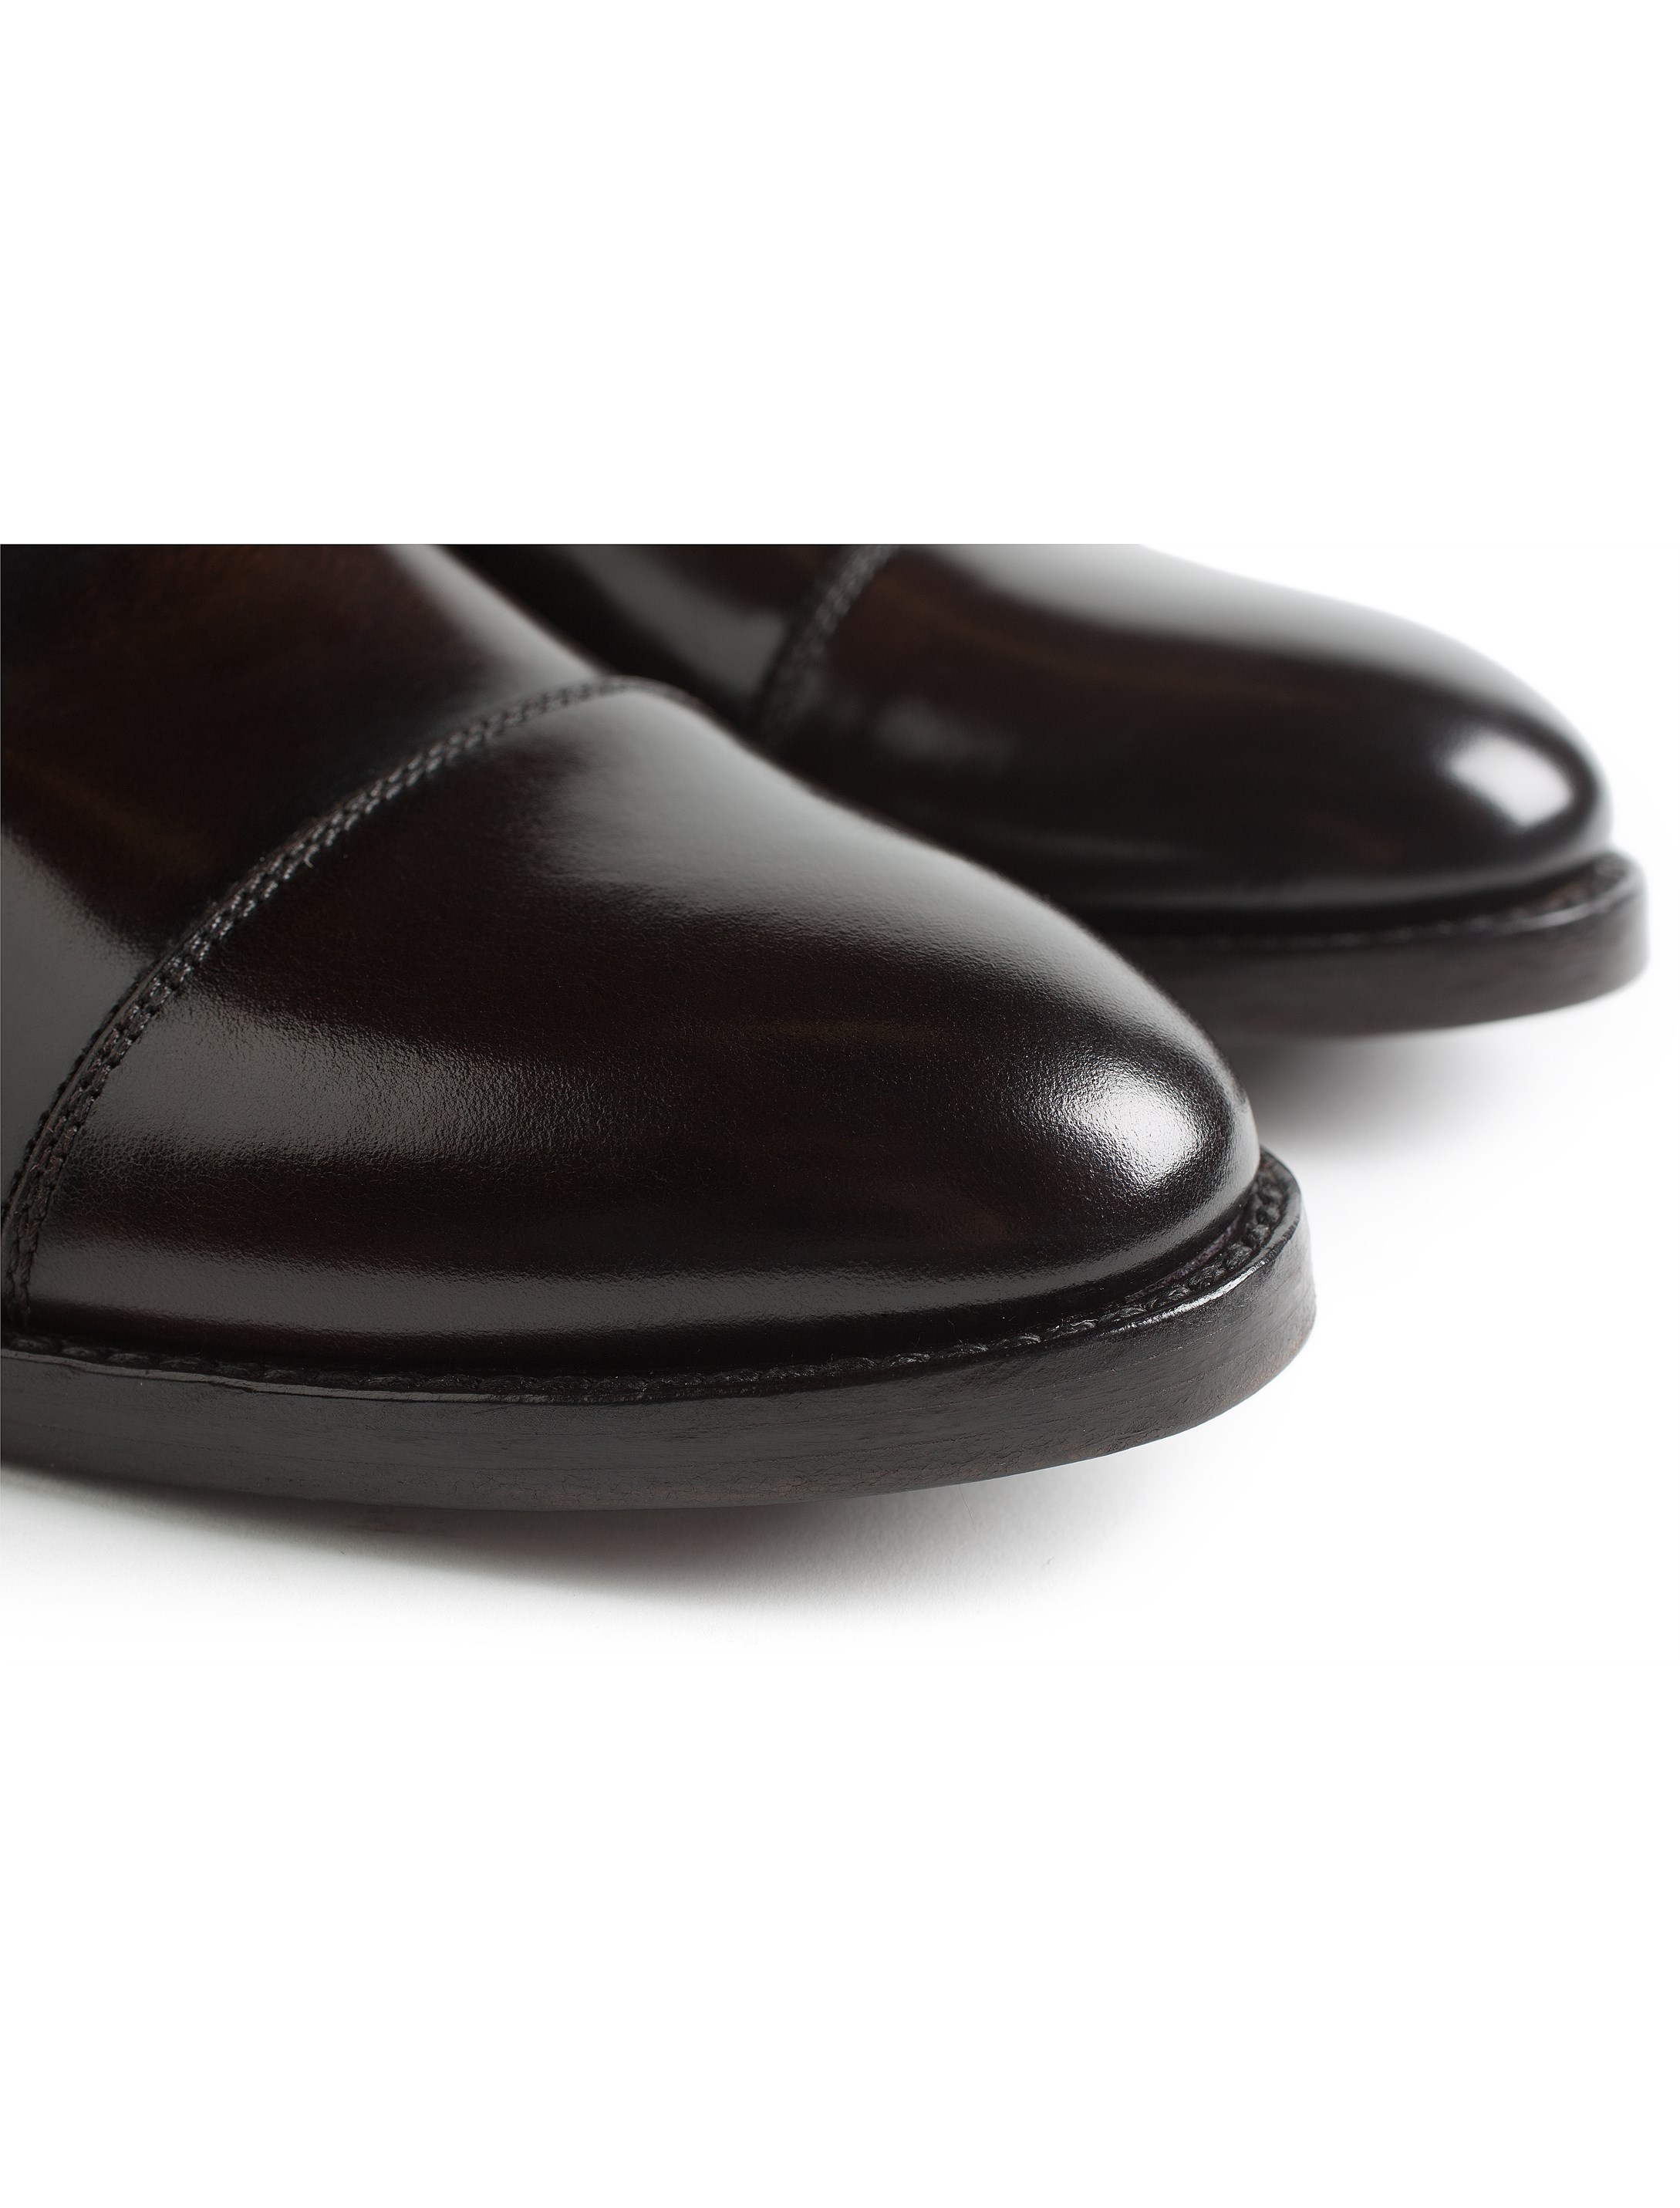 Dark Brown Boot Fw162151 | Suitsupply Online Store